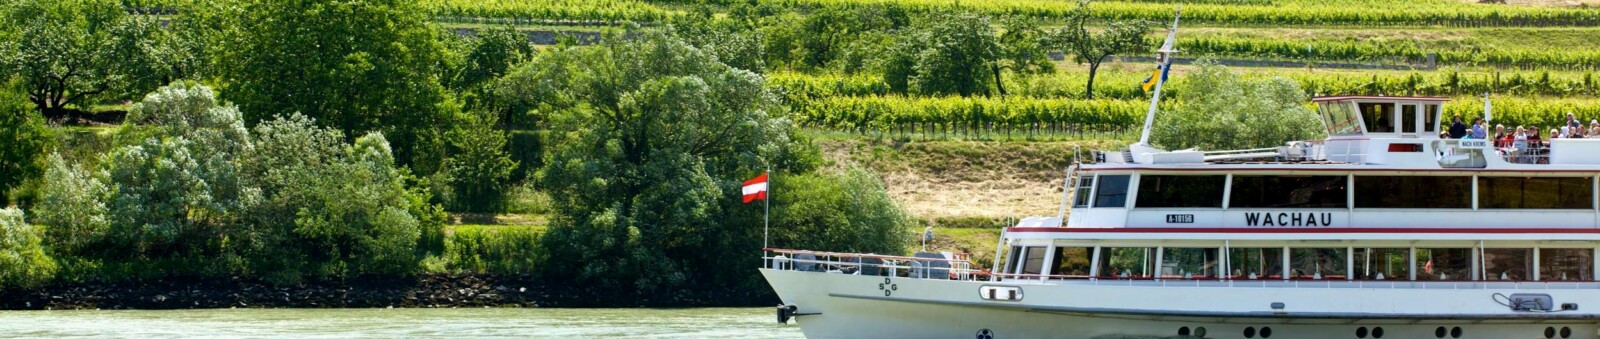     Cruise on the Danube river / Wachau Valley